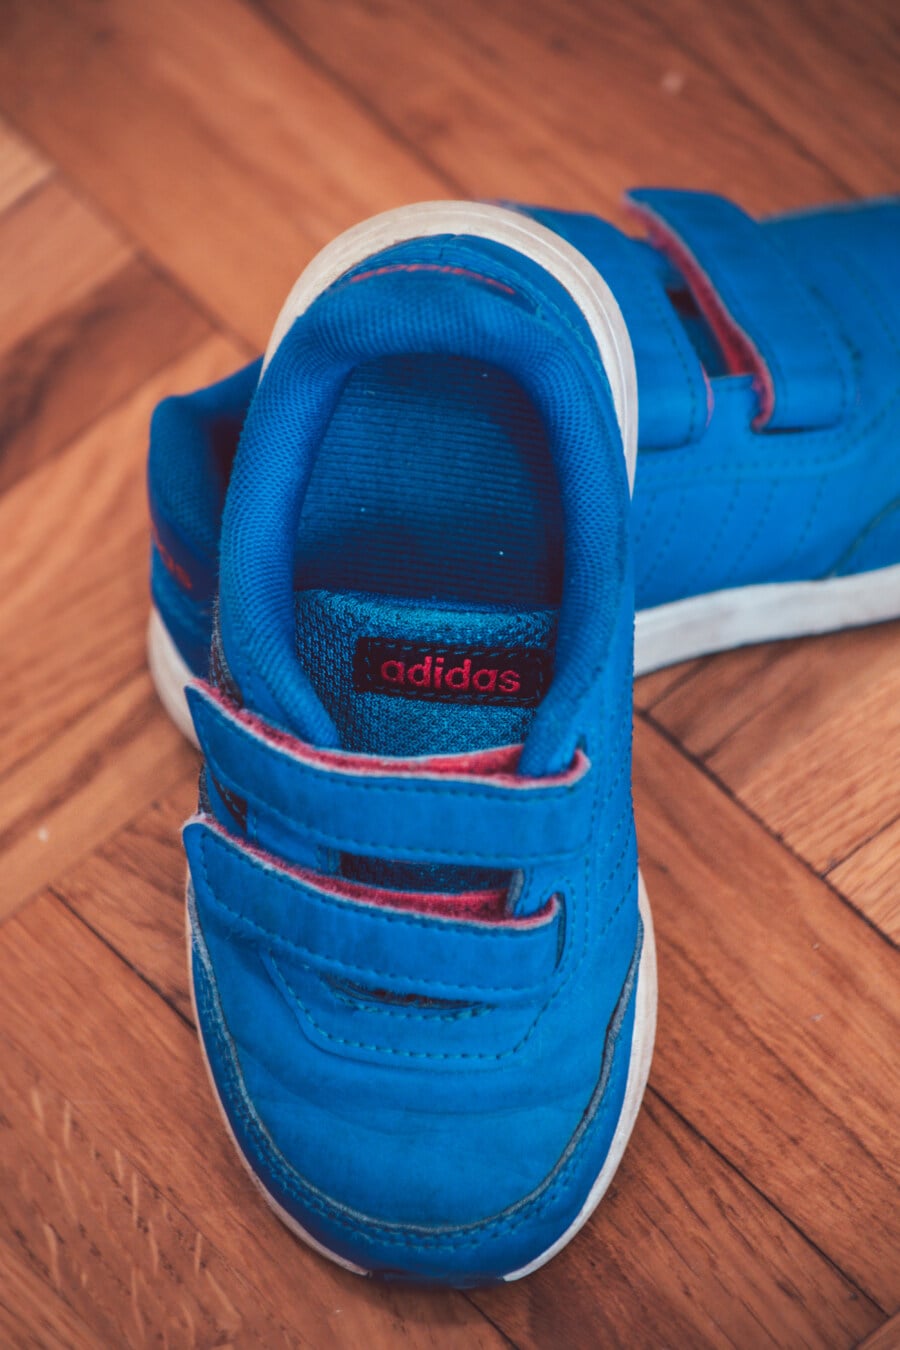 biru gelap, Adidas, sepatu kets, santai, mode, alas kaki, kenyamanan, rekreasi, klasik, objek